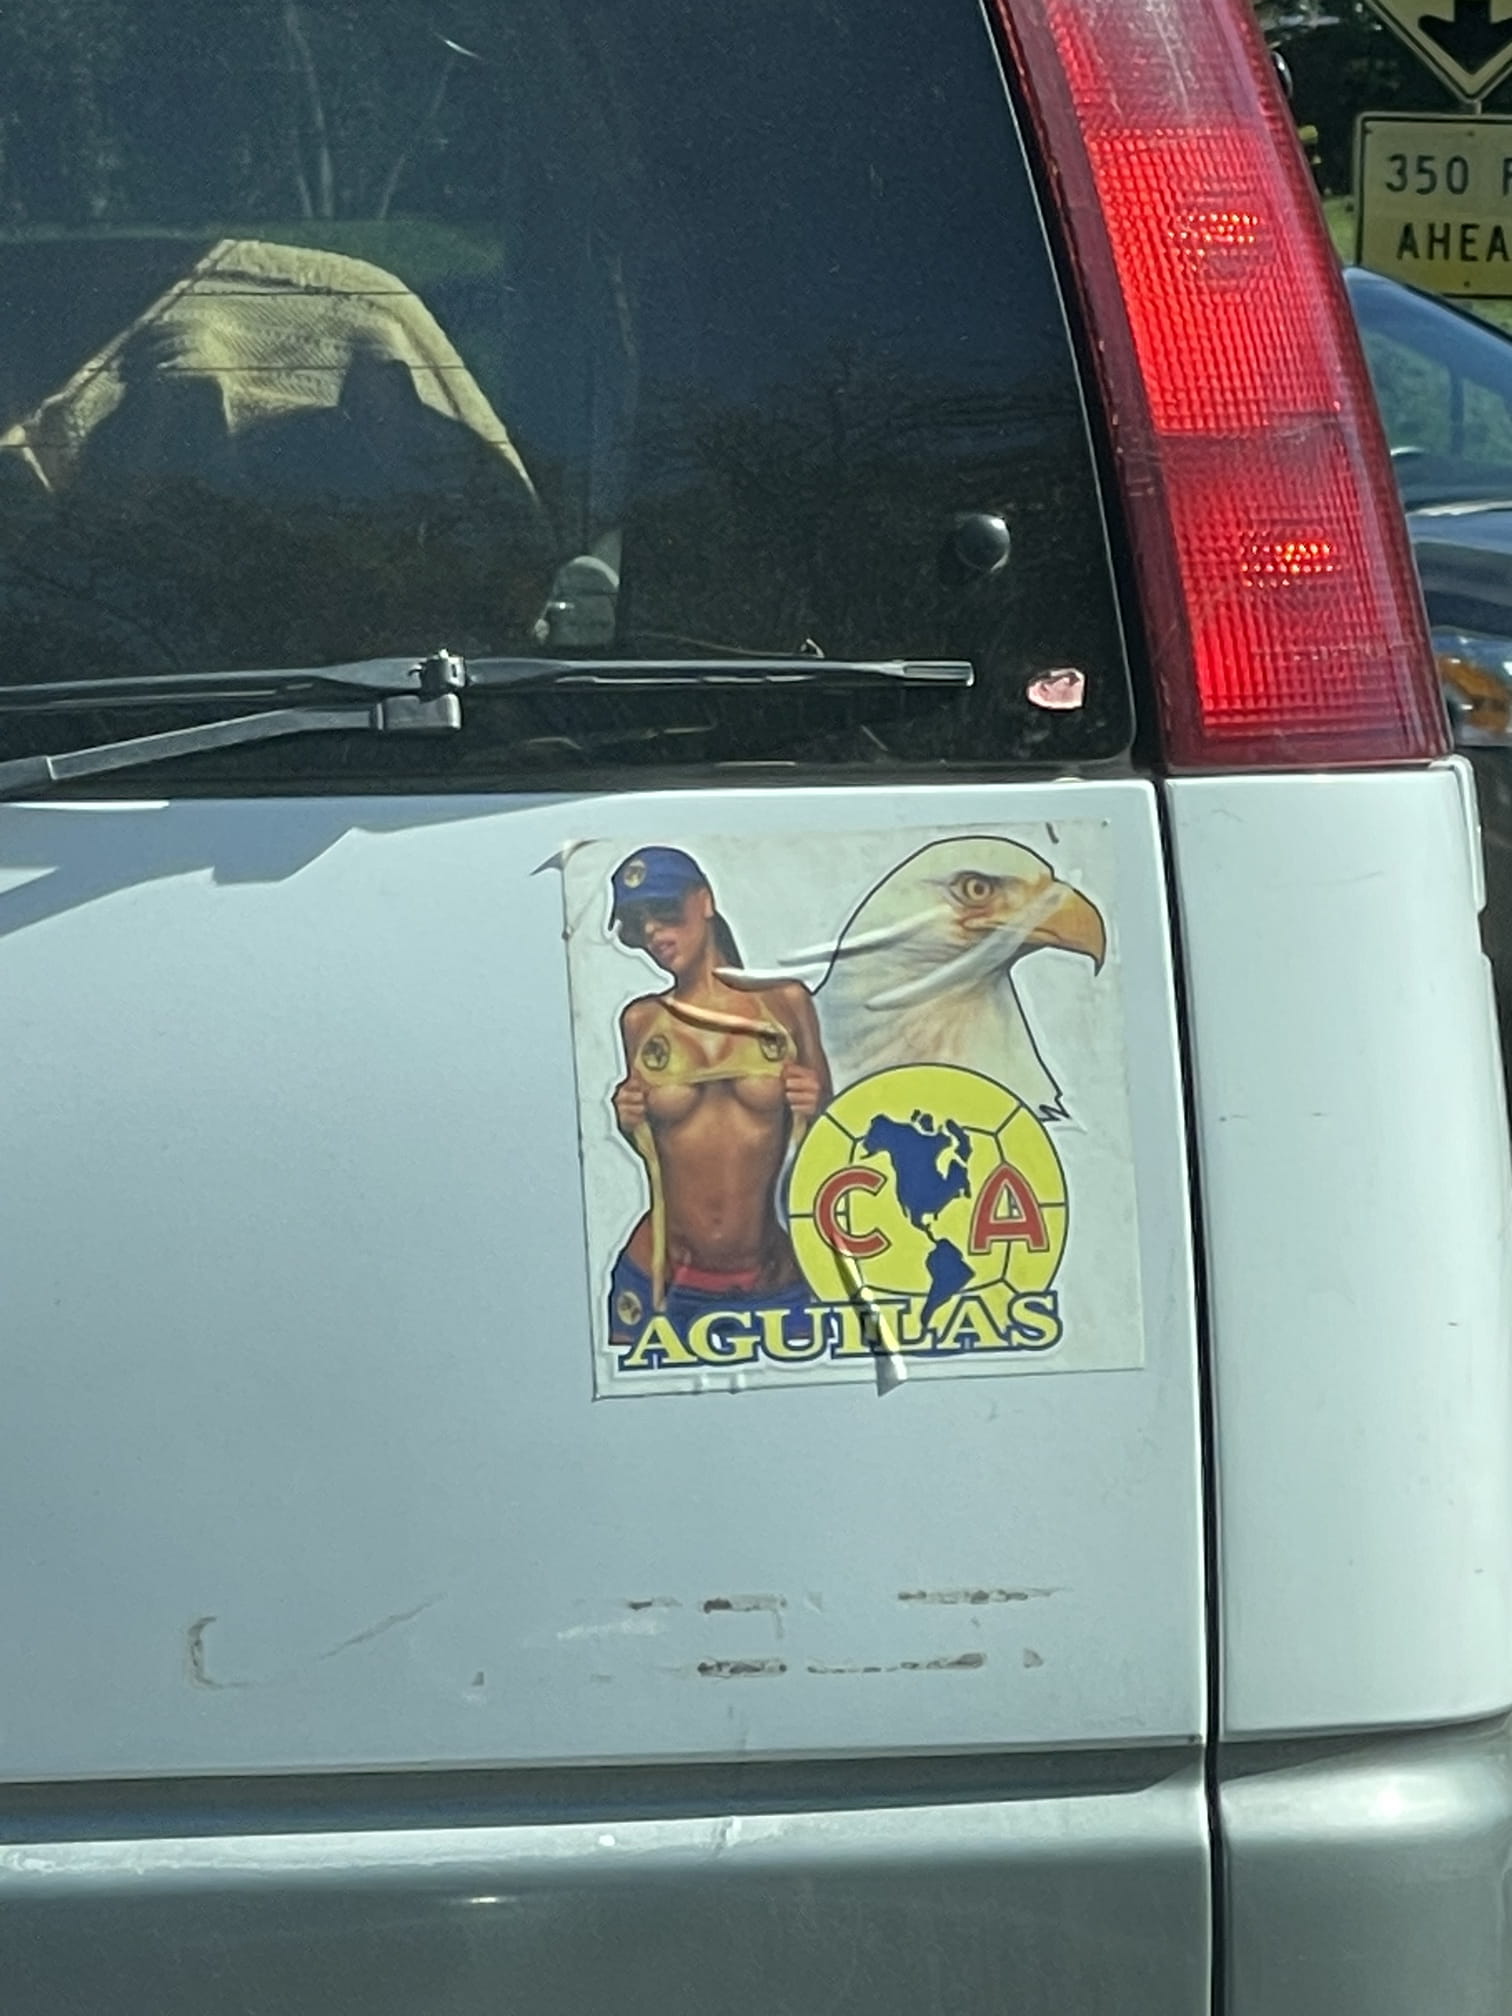 Aguilas bumper sticker